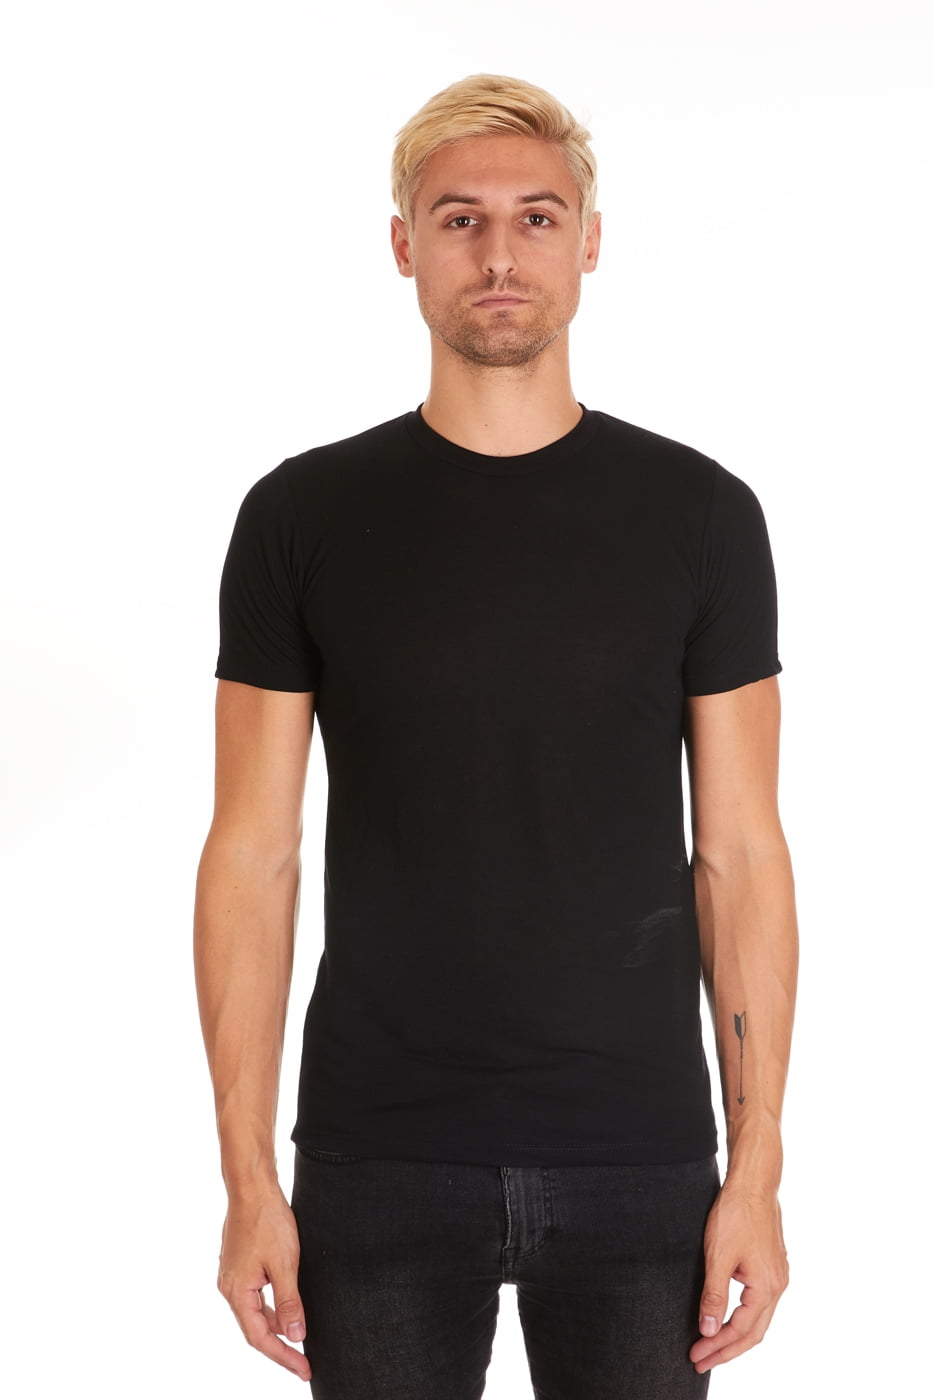 pacific men's super soft rayon short-sleeve crew-neck t-shirt - Walmart.com